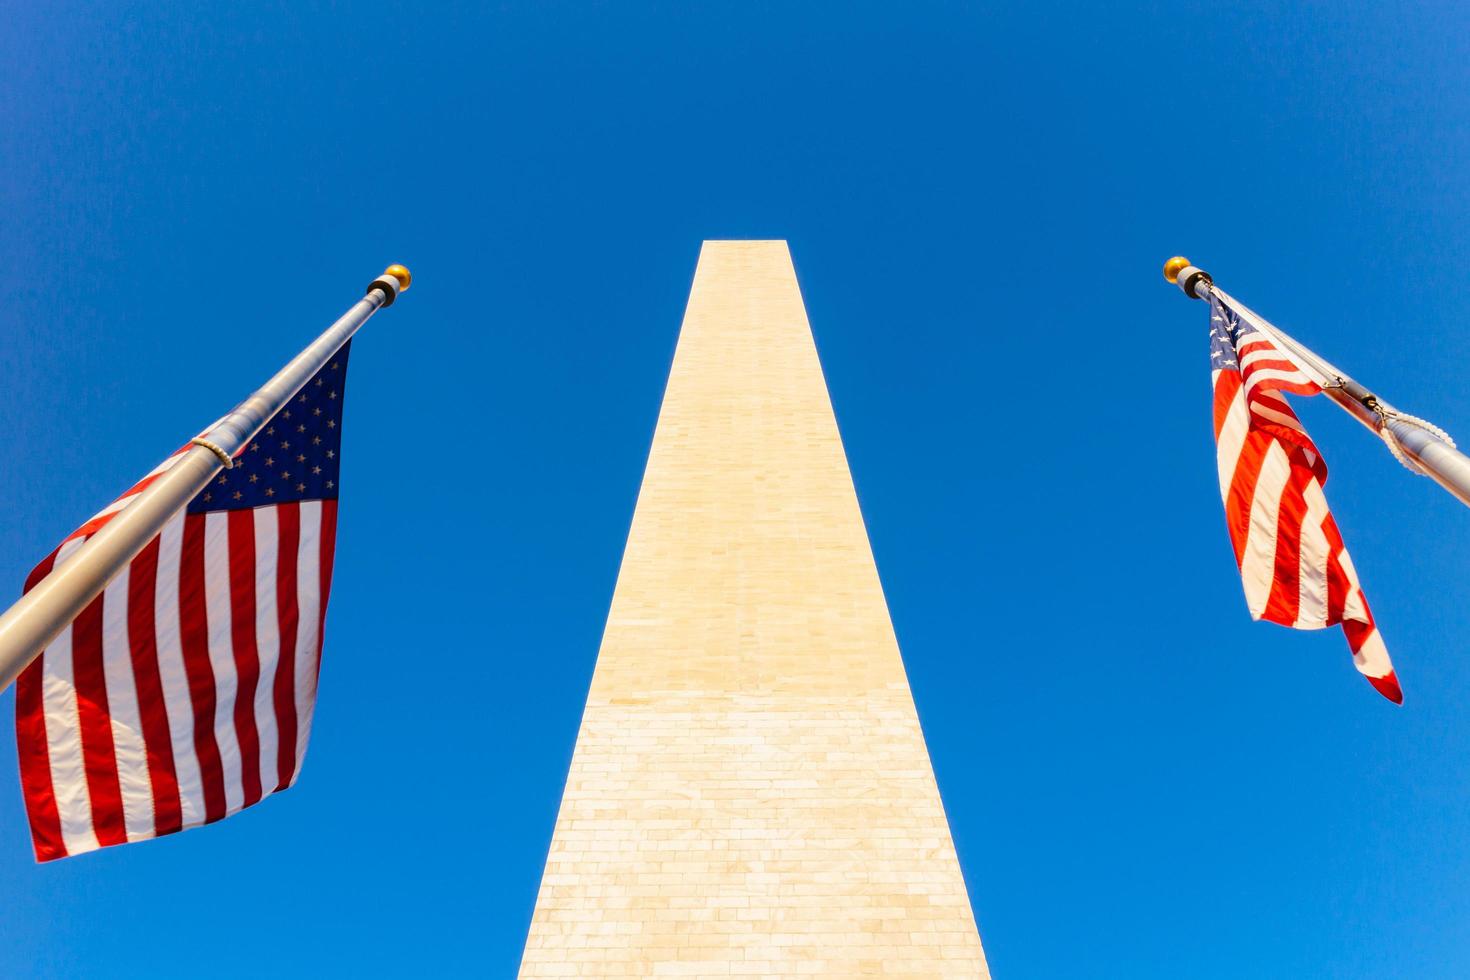 Washington monument on a sunny day. photo